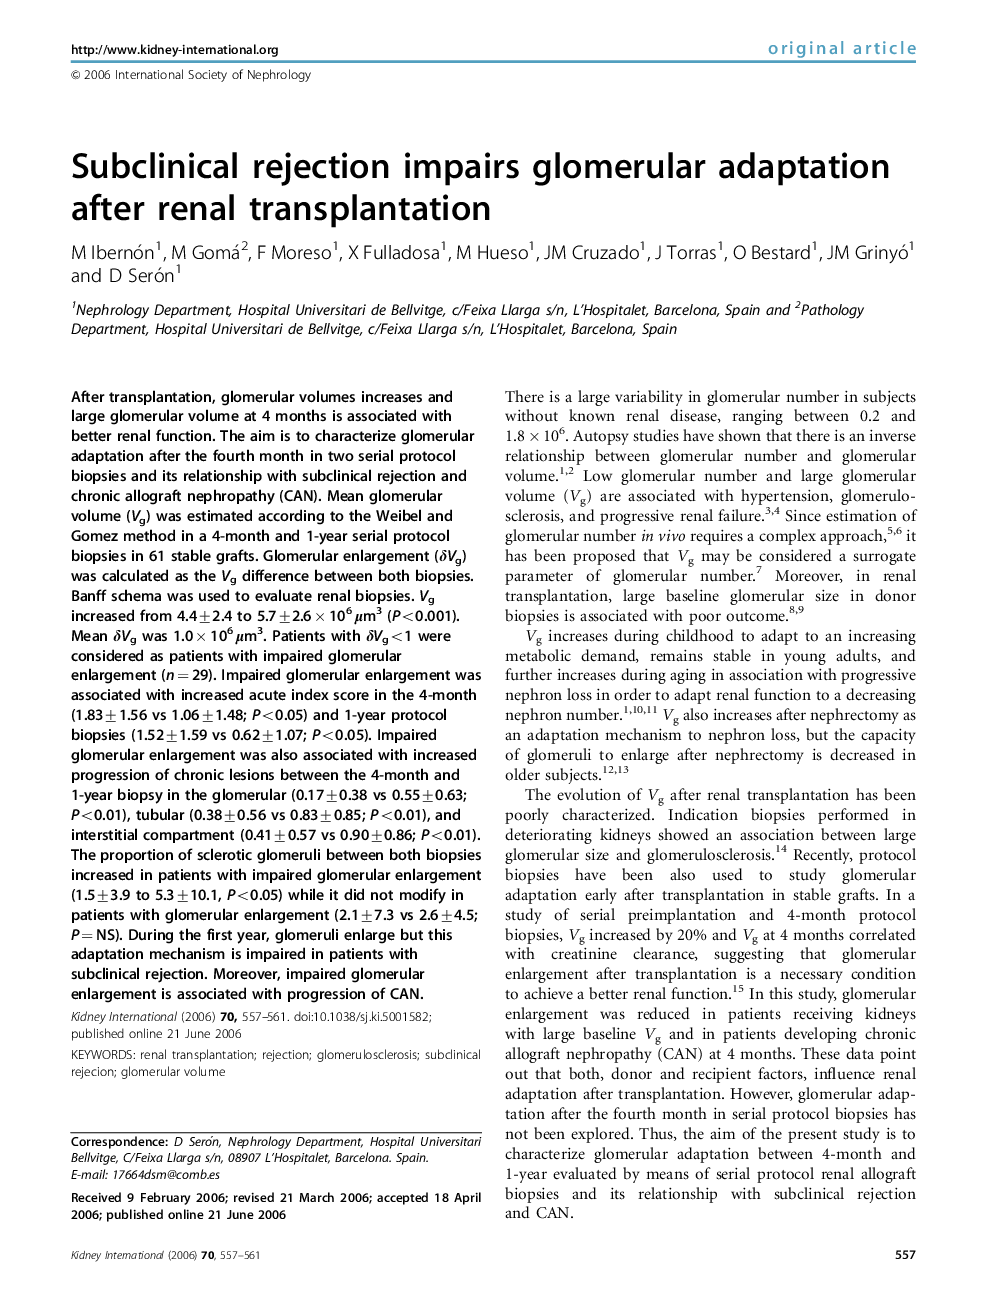 Subclinical rejection impairs glomerular adaptation after renal transplantation